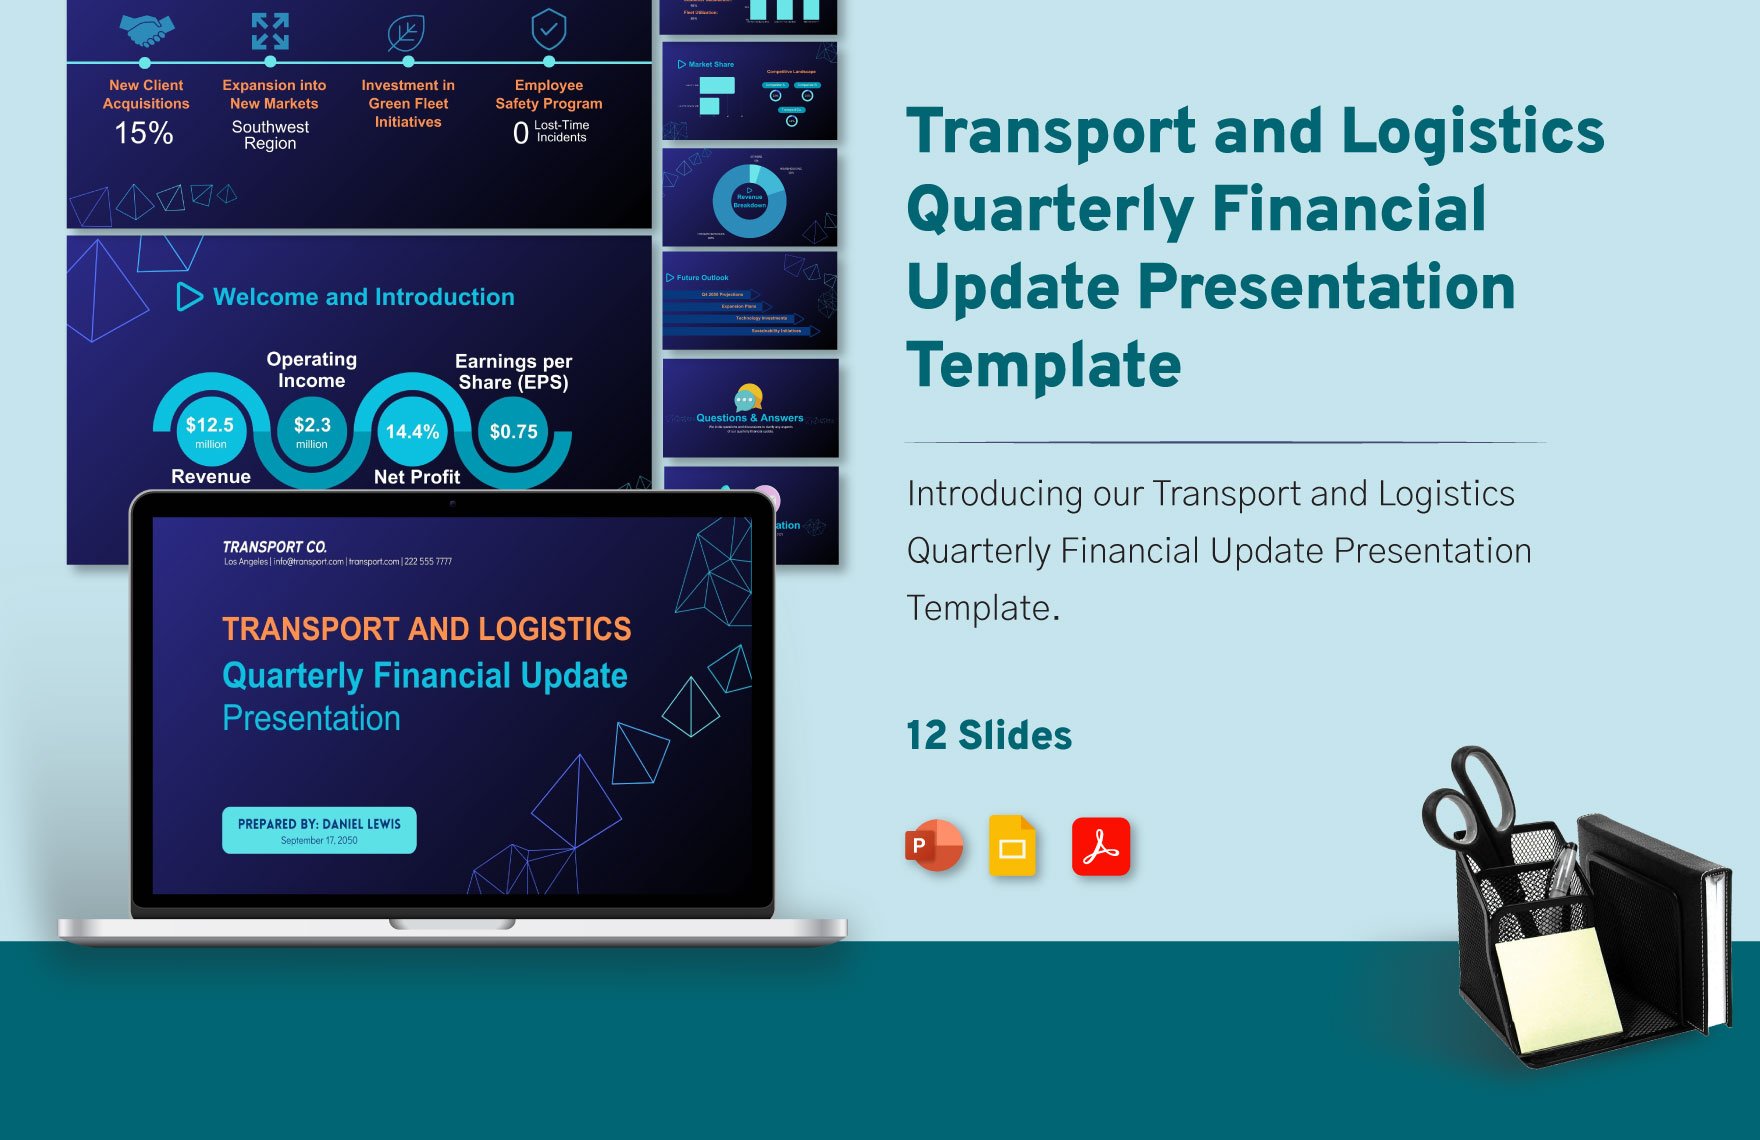 Transport and Logistics Quarterly Financial Update Presentation Template